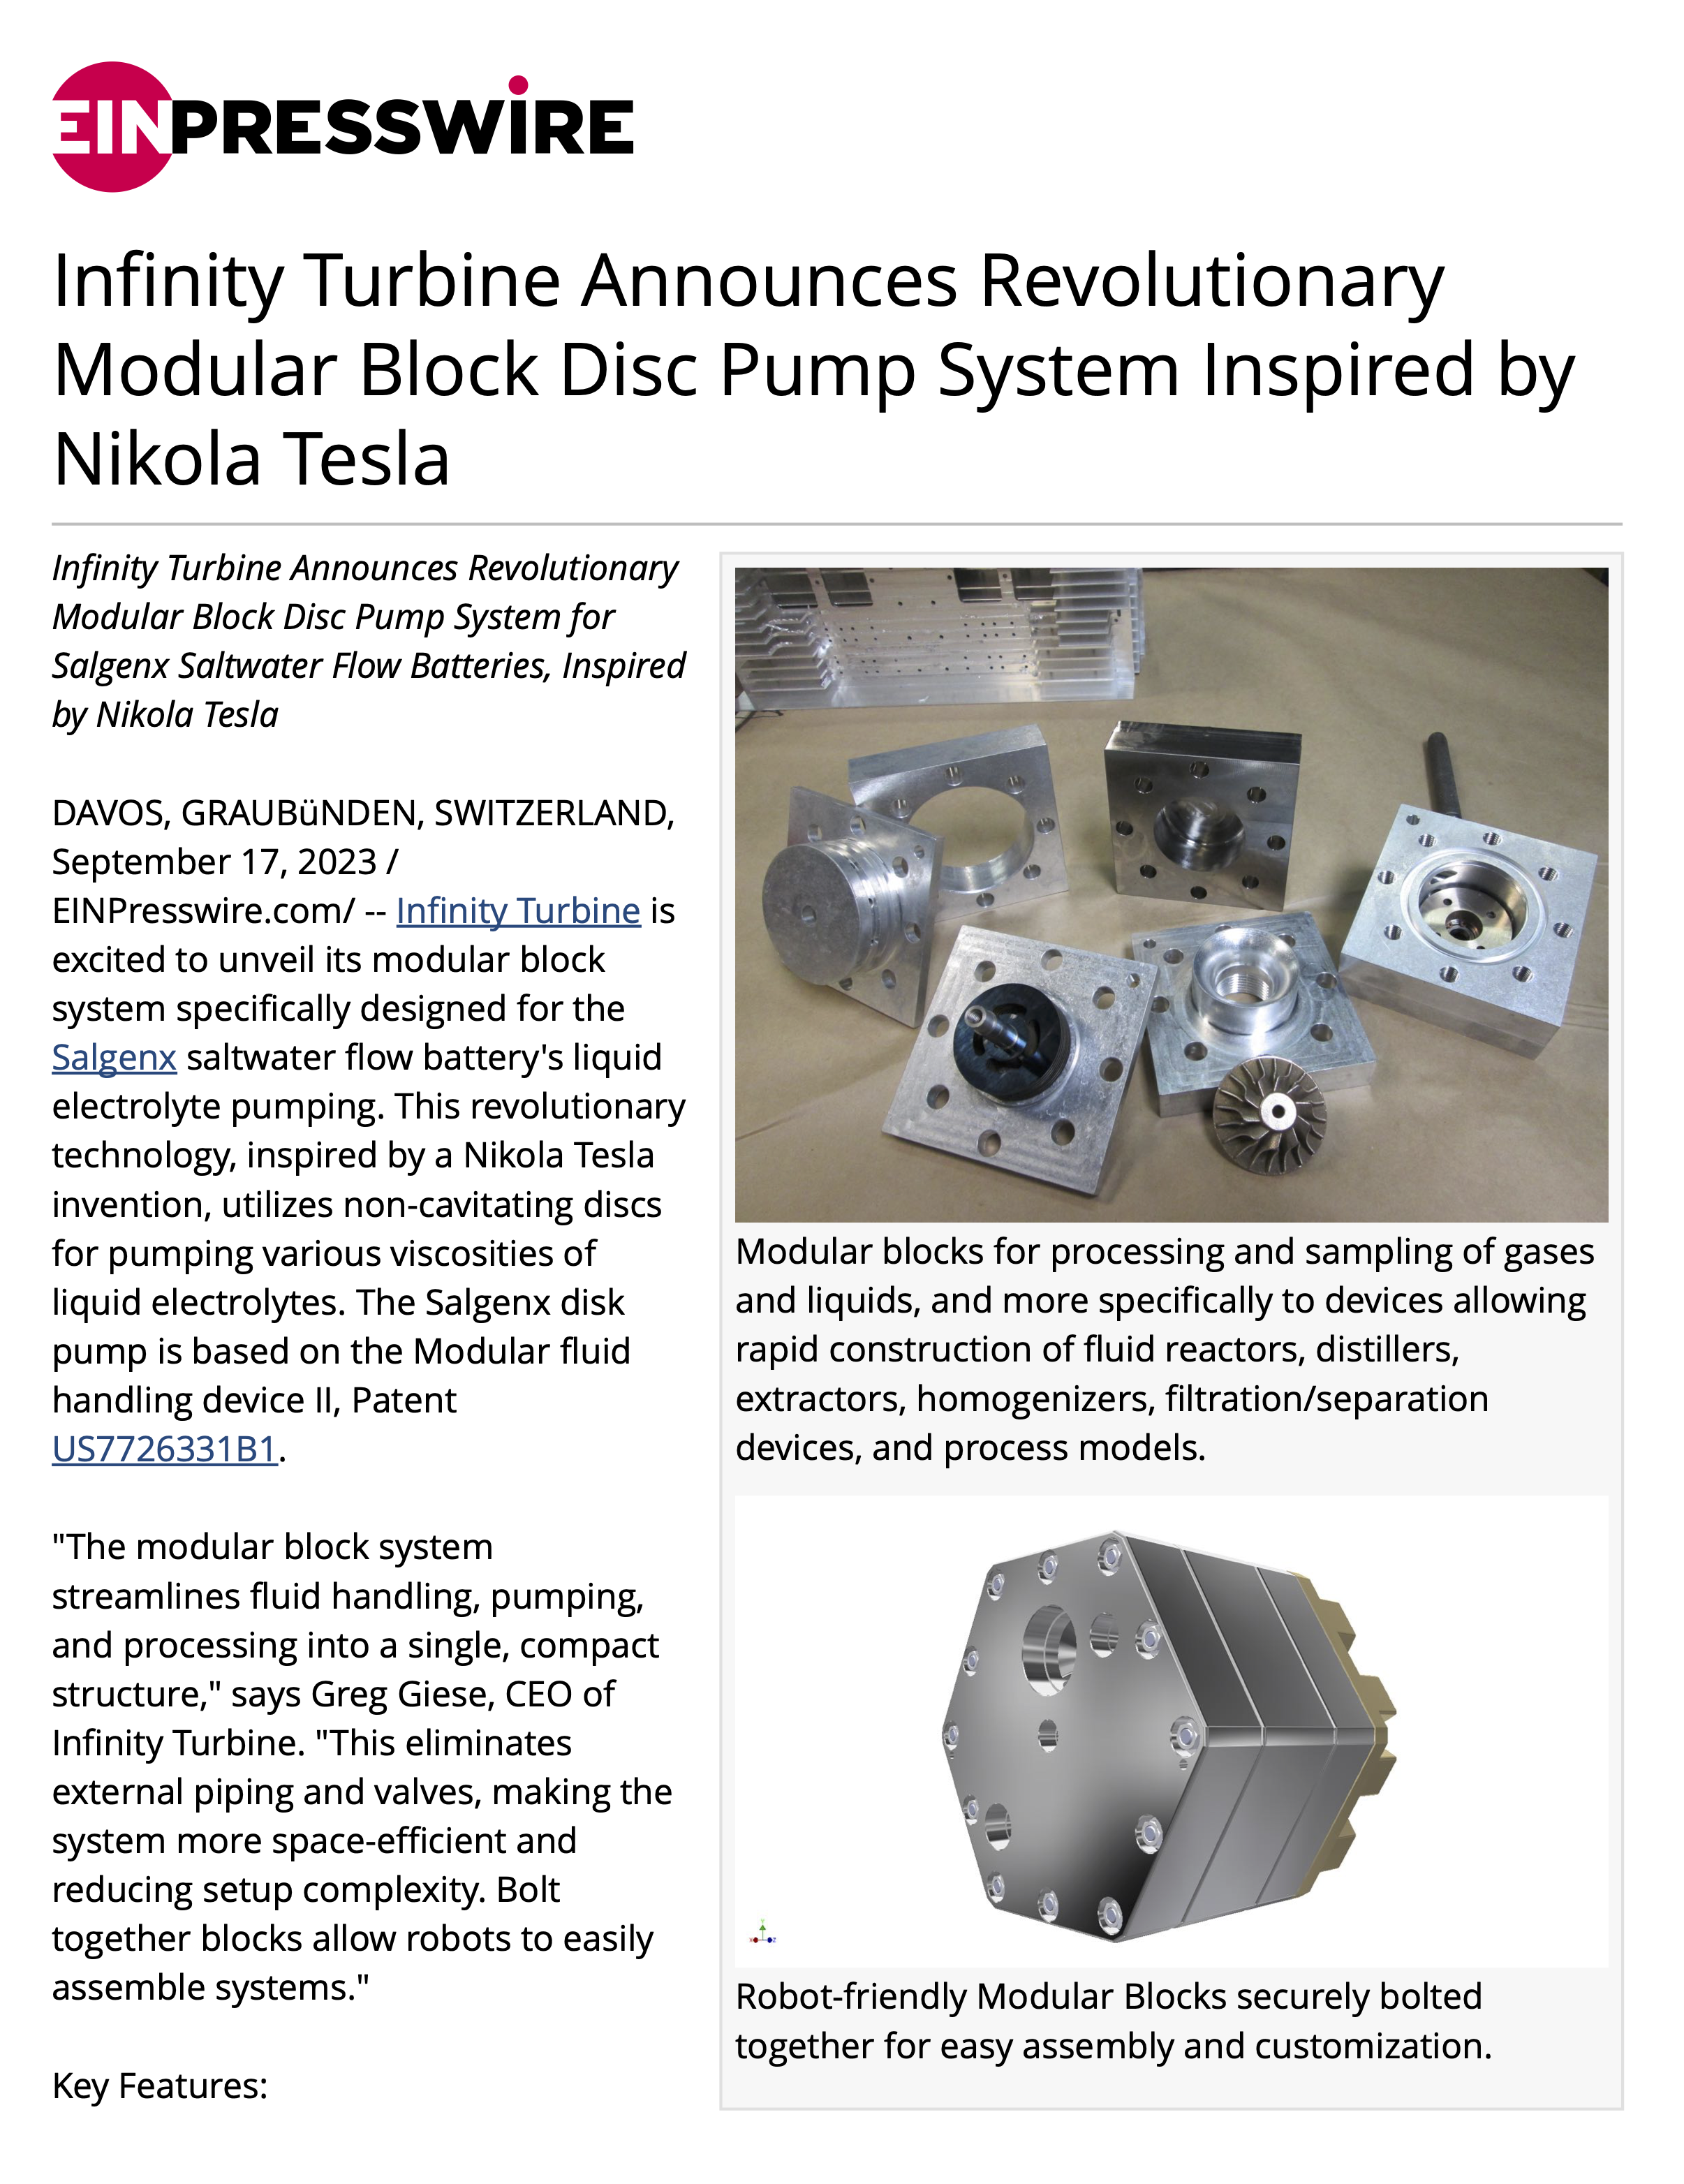 Infinity Turbine Announces Revolutionary Modular Block Disc Pump System Inspired by Nikola Tesla